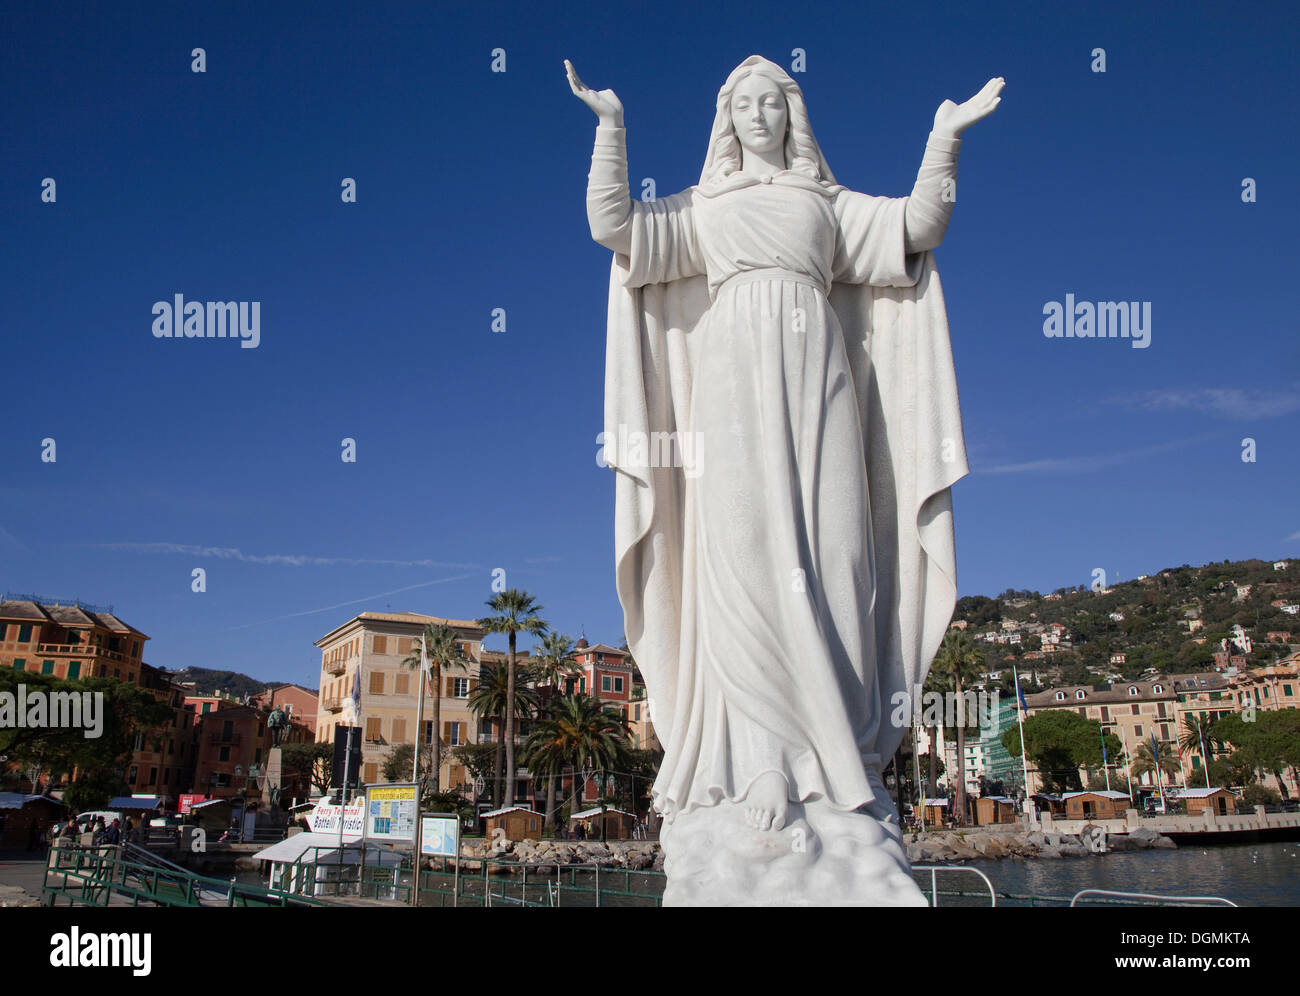 La estatua de la Virgen en el puerto de Santa Margherita, Golf von Genua, Santa Margherita, Liguria, Italia Foto de stock